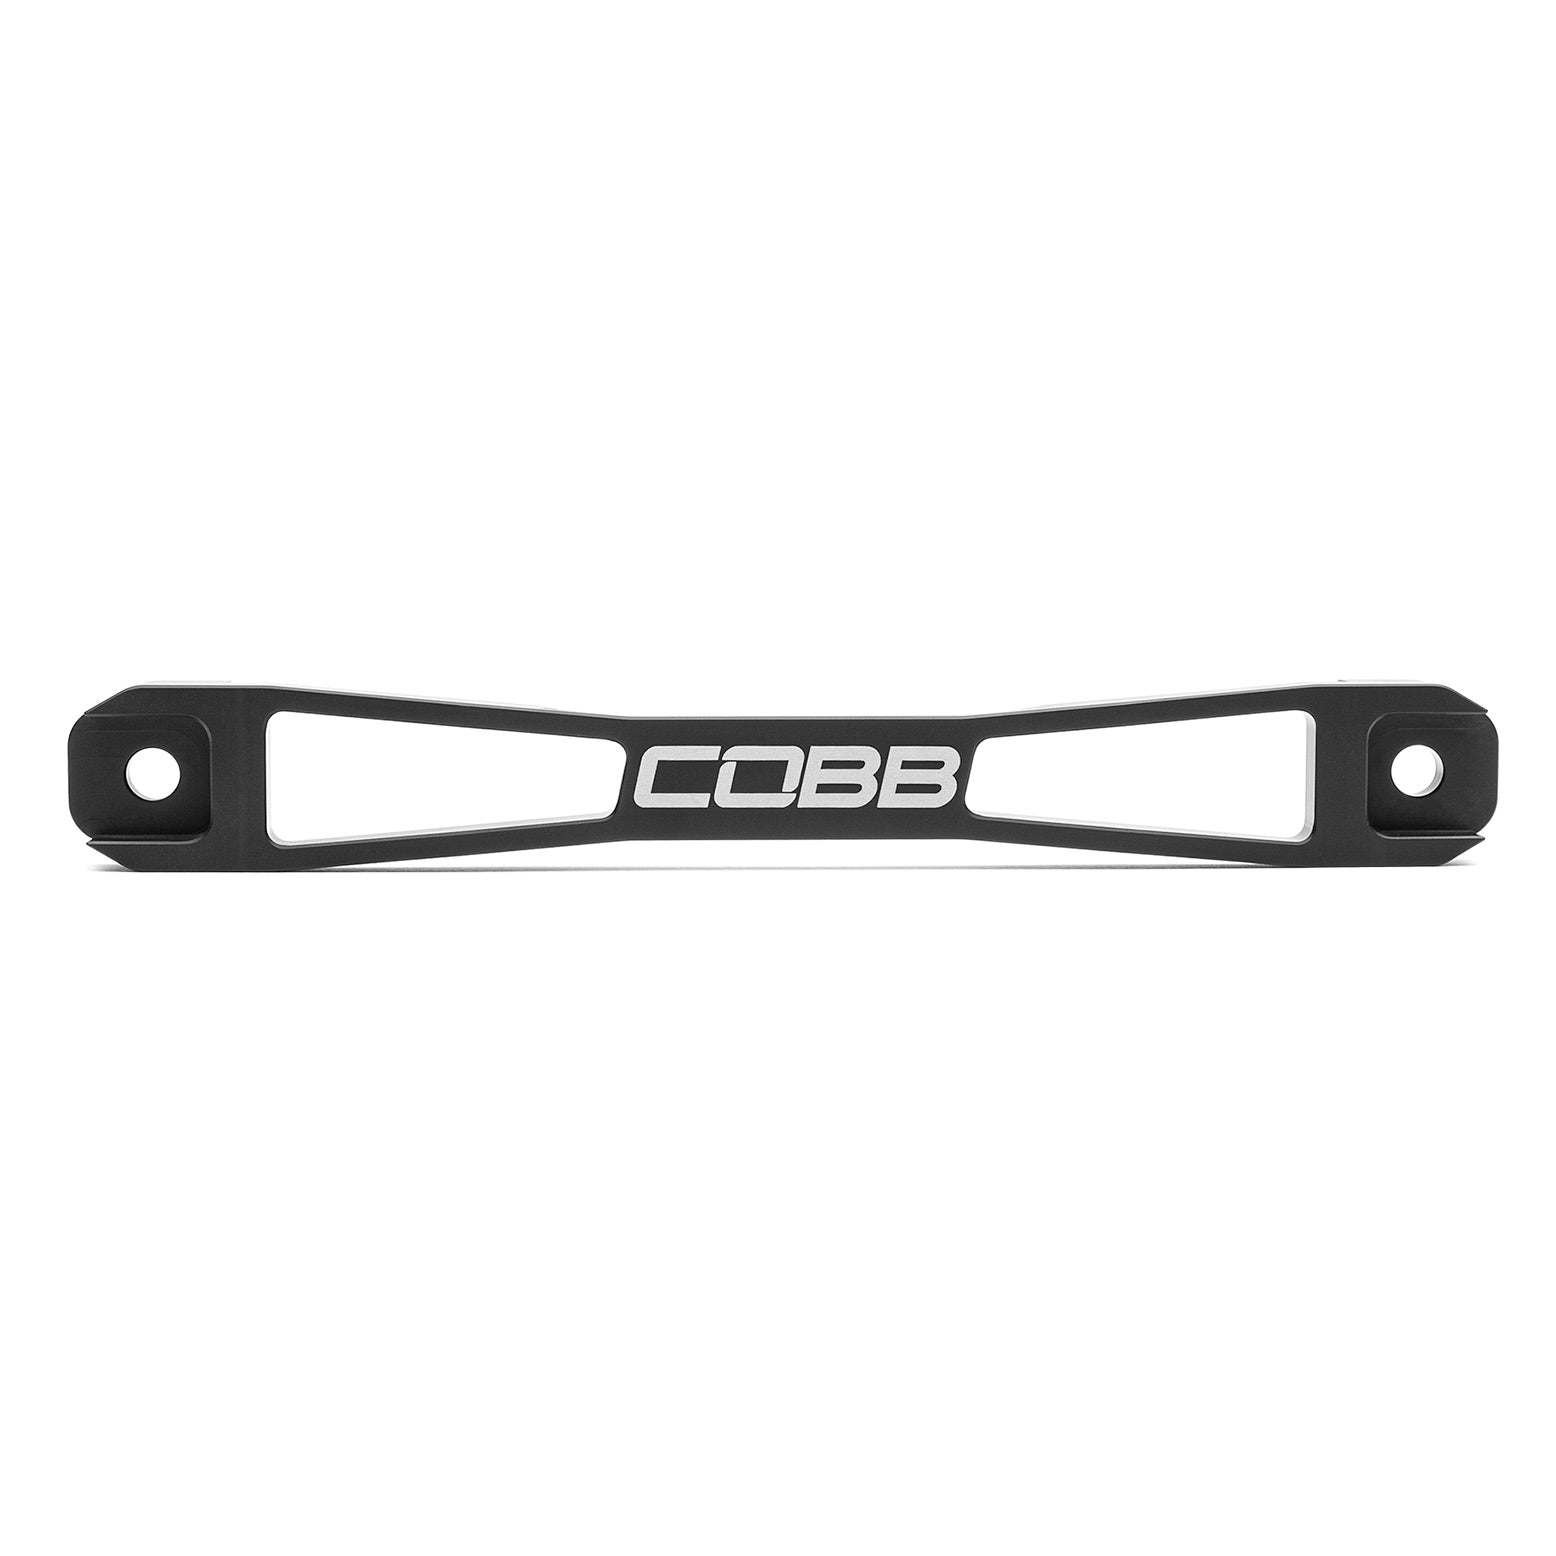 COBB 800160 SUBARU Battery Tie Down Photo-1 